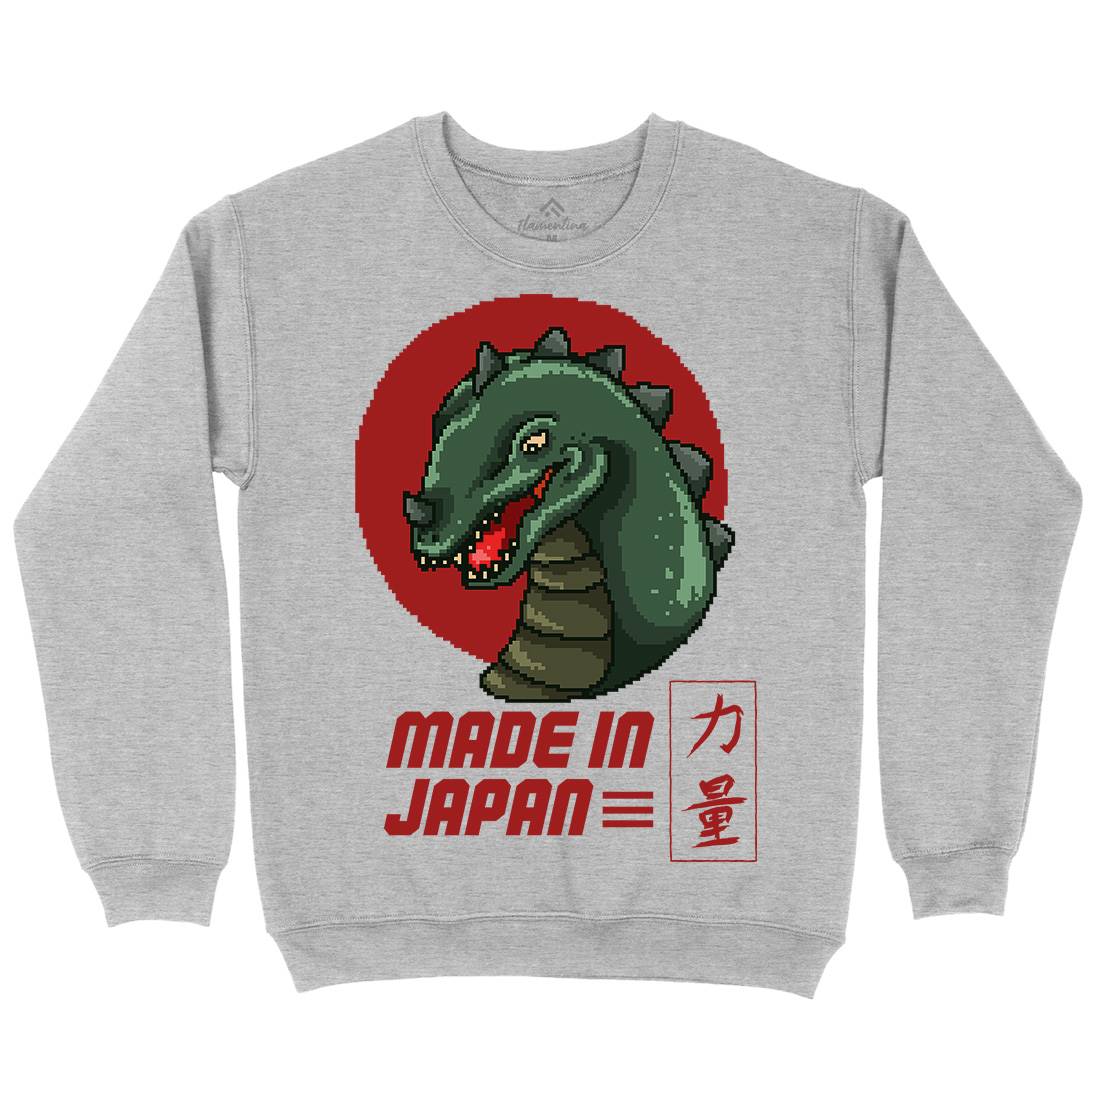 Made In Japan Kids Crew Neck Sweatshirt Horror B928